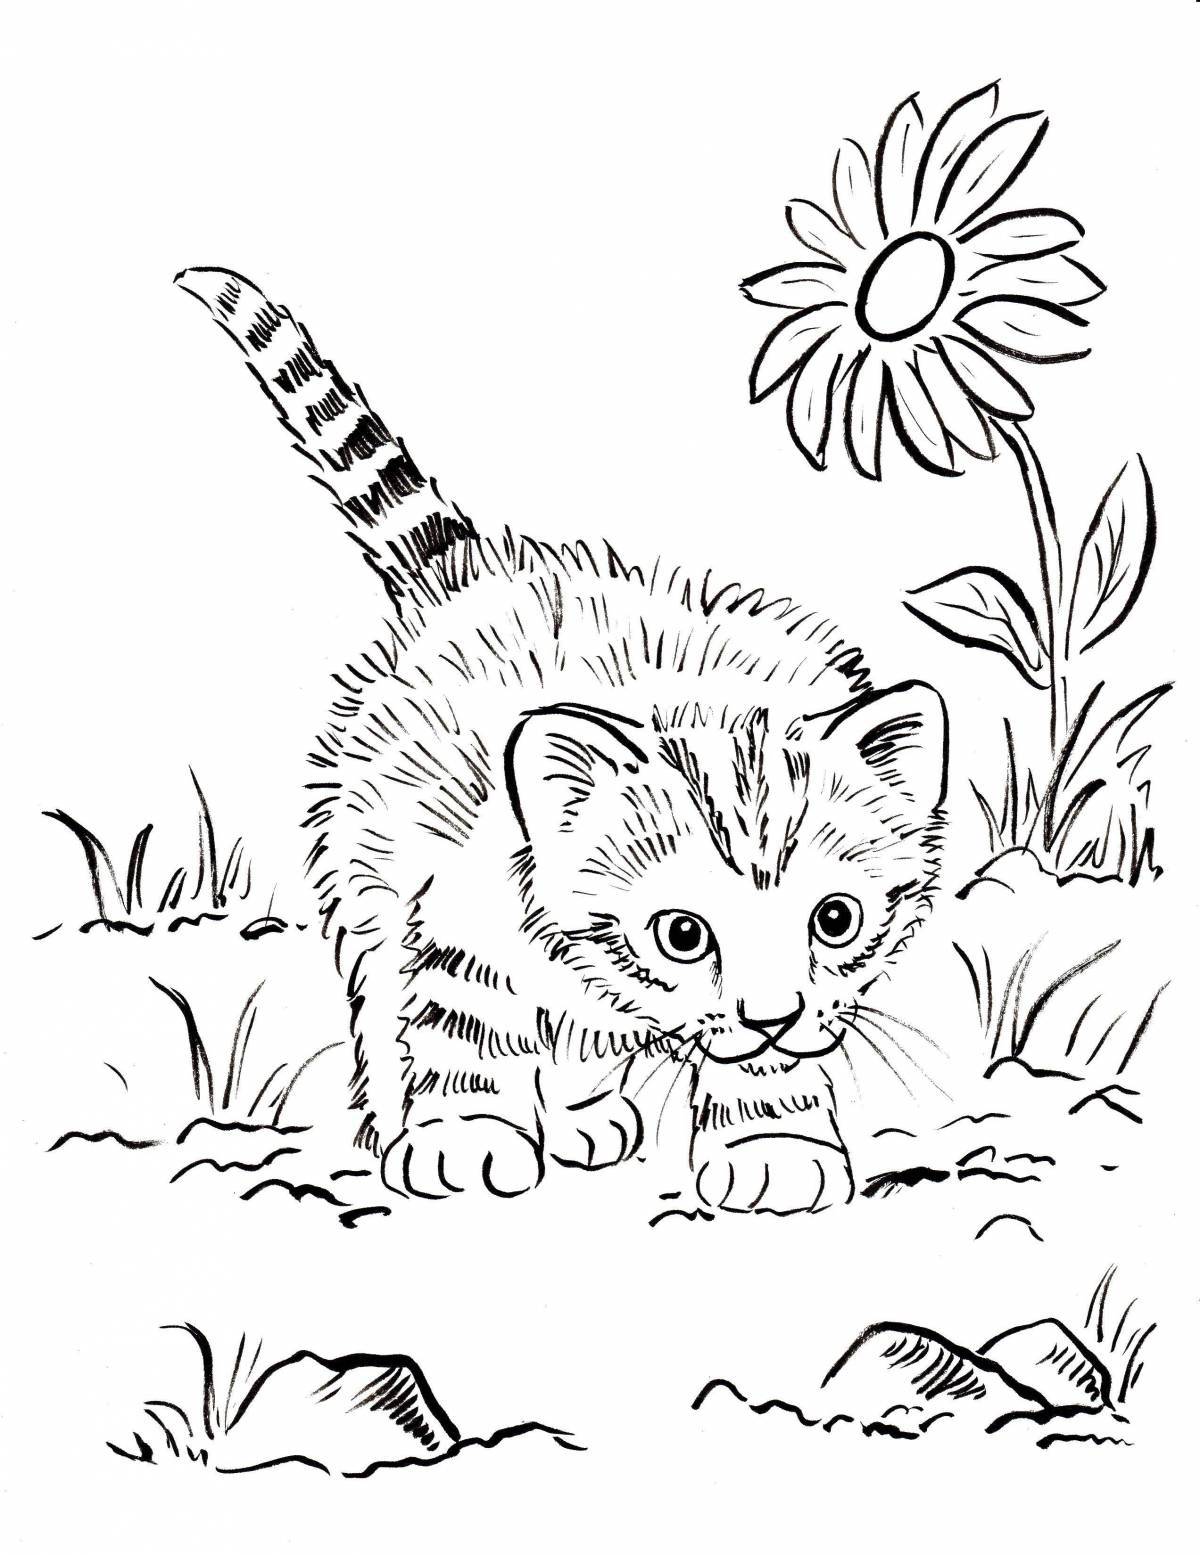 Snuggly coloring page кошка с котятами